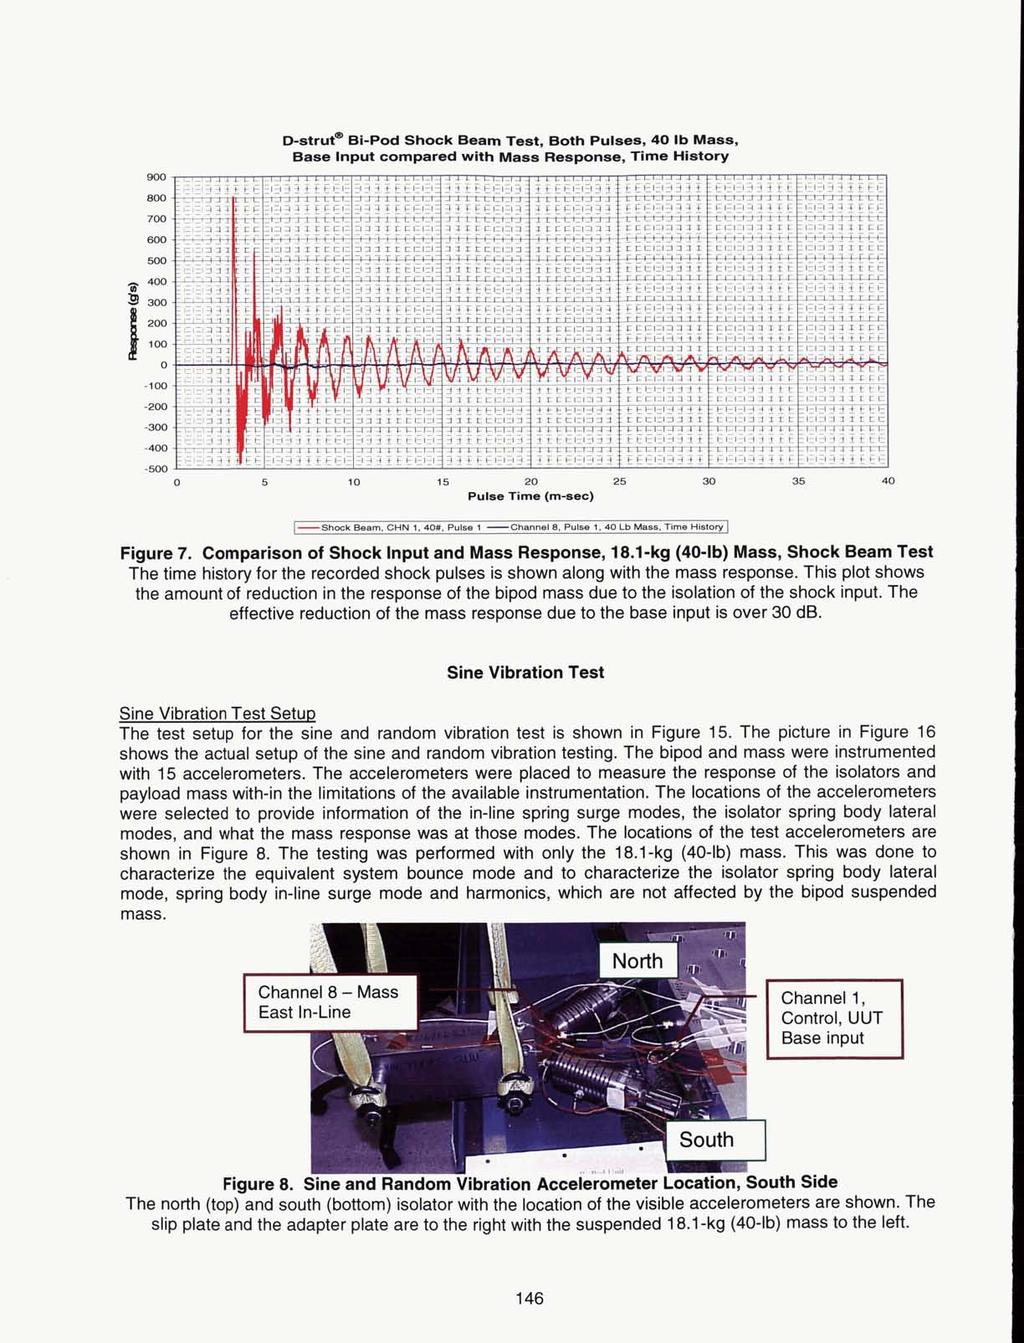 Dstrutm Bi-Pod Shock Beam Test, Both Pulses, 40 Ib Mass, Base Input compared with Mass Response, Time History 800 700 600 500-100 -200-300 -400-500 0 5 10 15 20 25 30 35 40 Pulse Time (rn-sec) I-Shmk